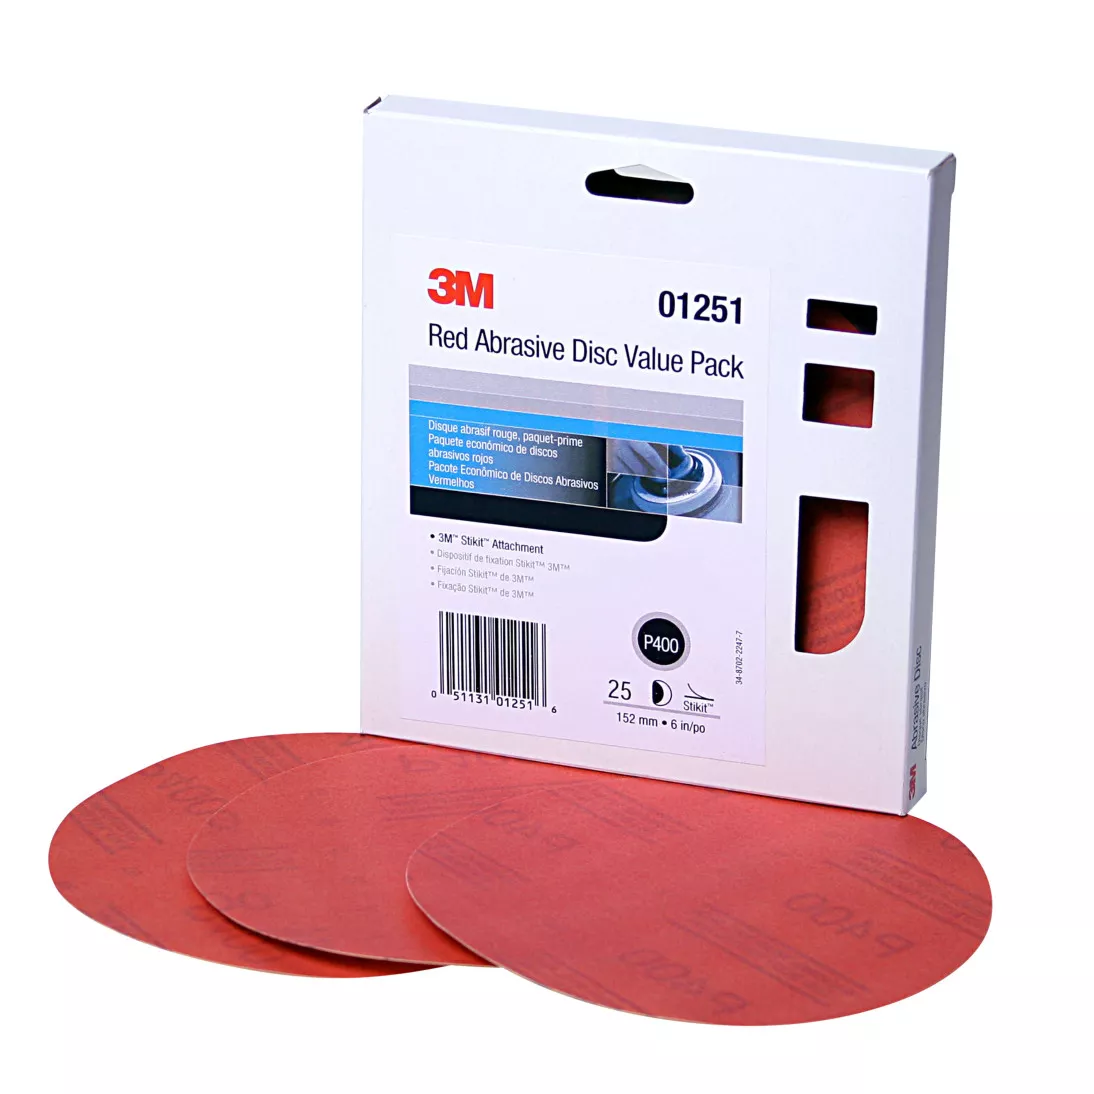 3M™ Red Abrasive Stikit™ Disc Value Pack, 01251, 6 in, P400 grade, 25
discs per carton, 4 cartons per case